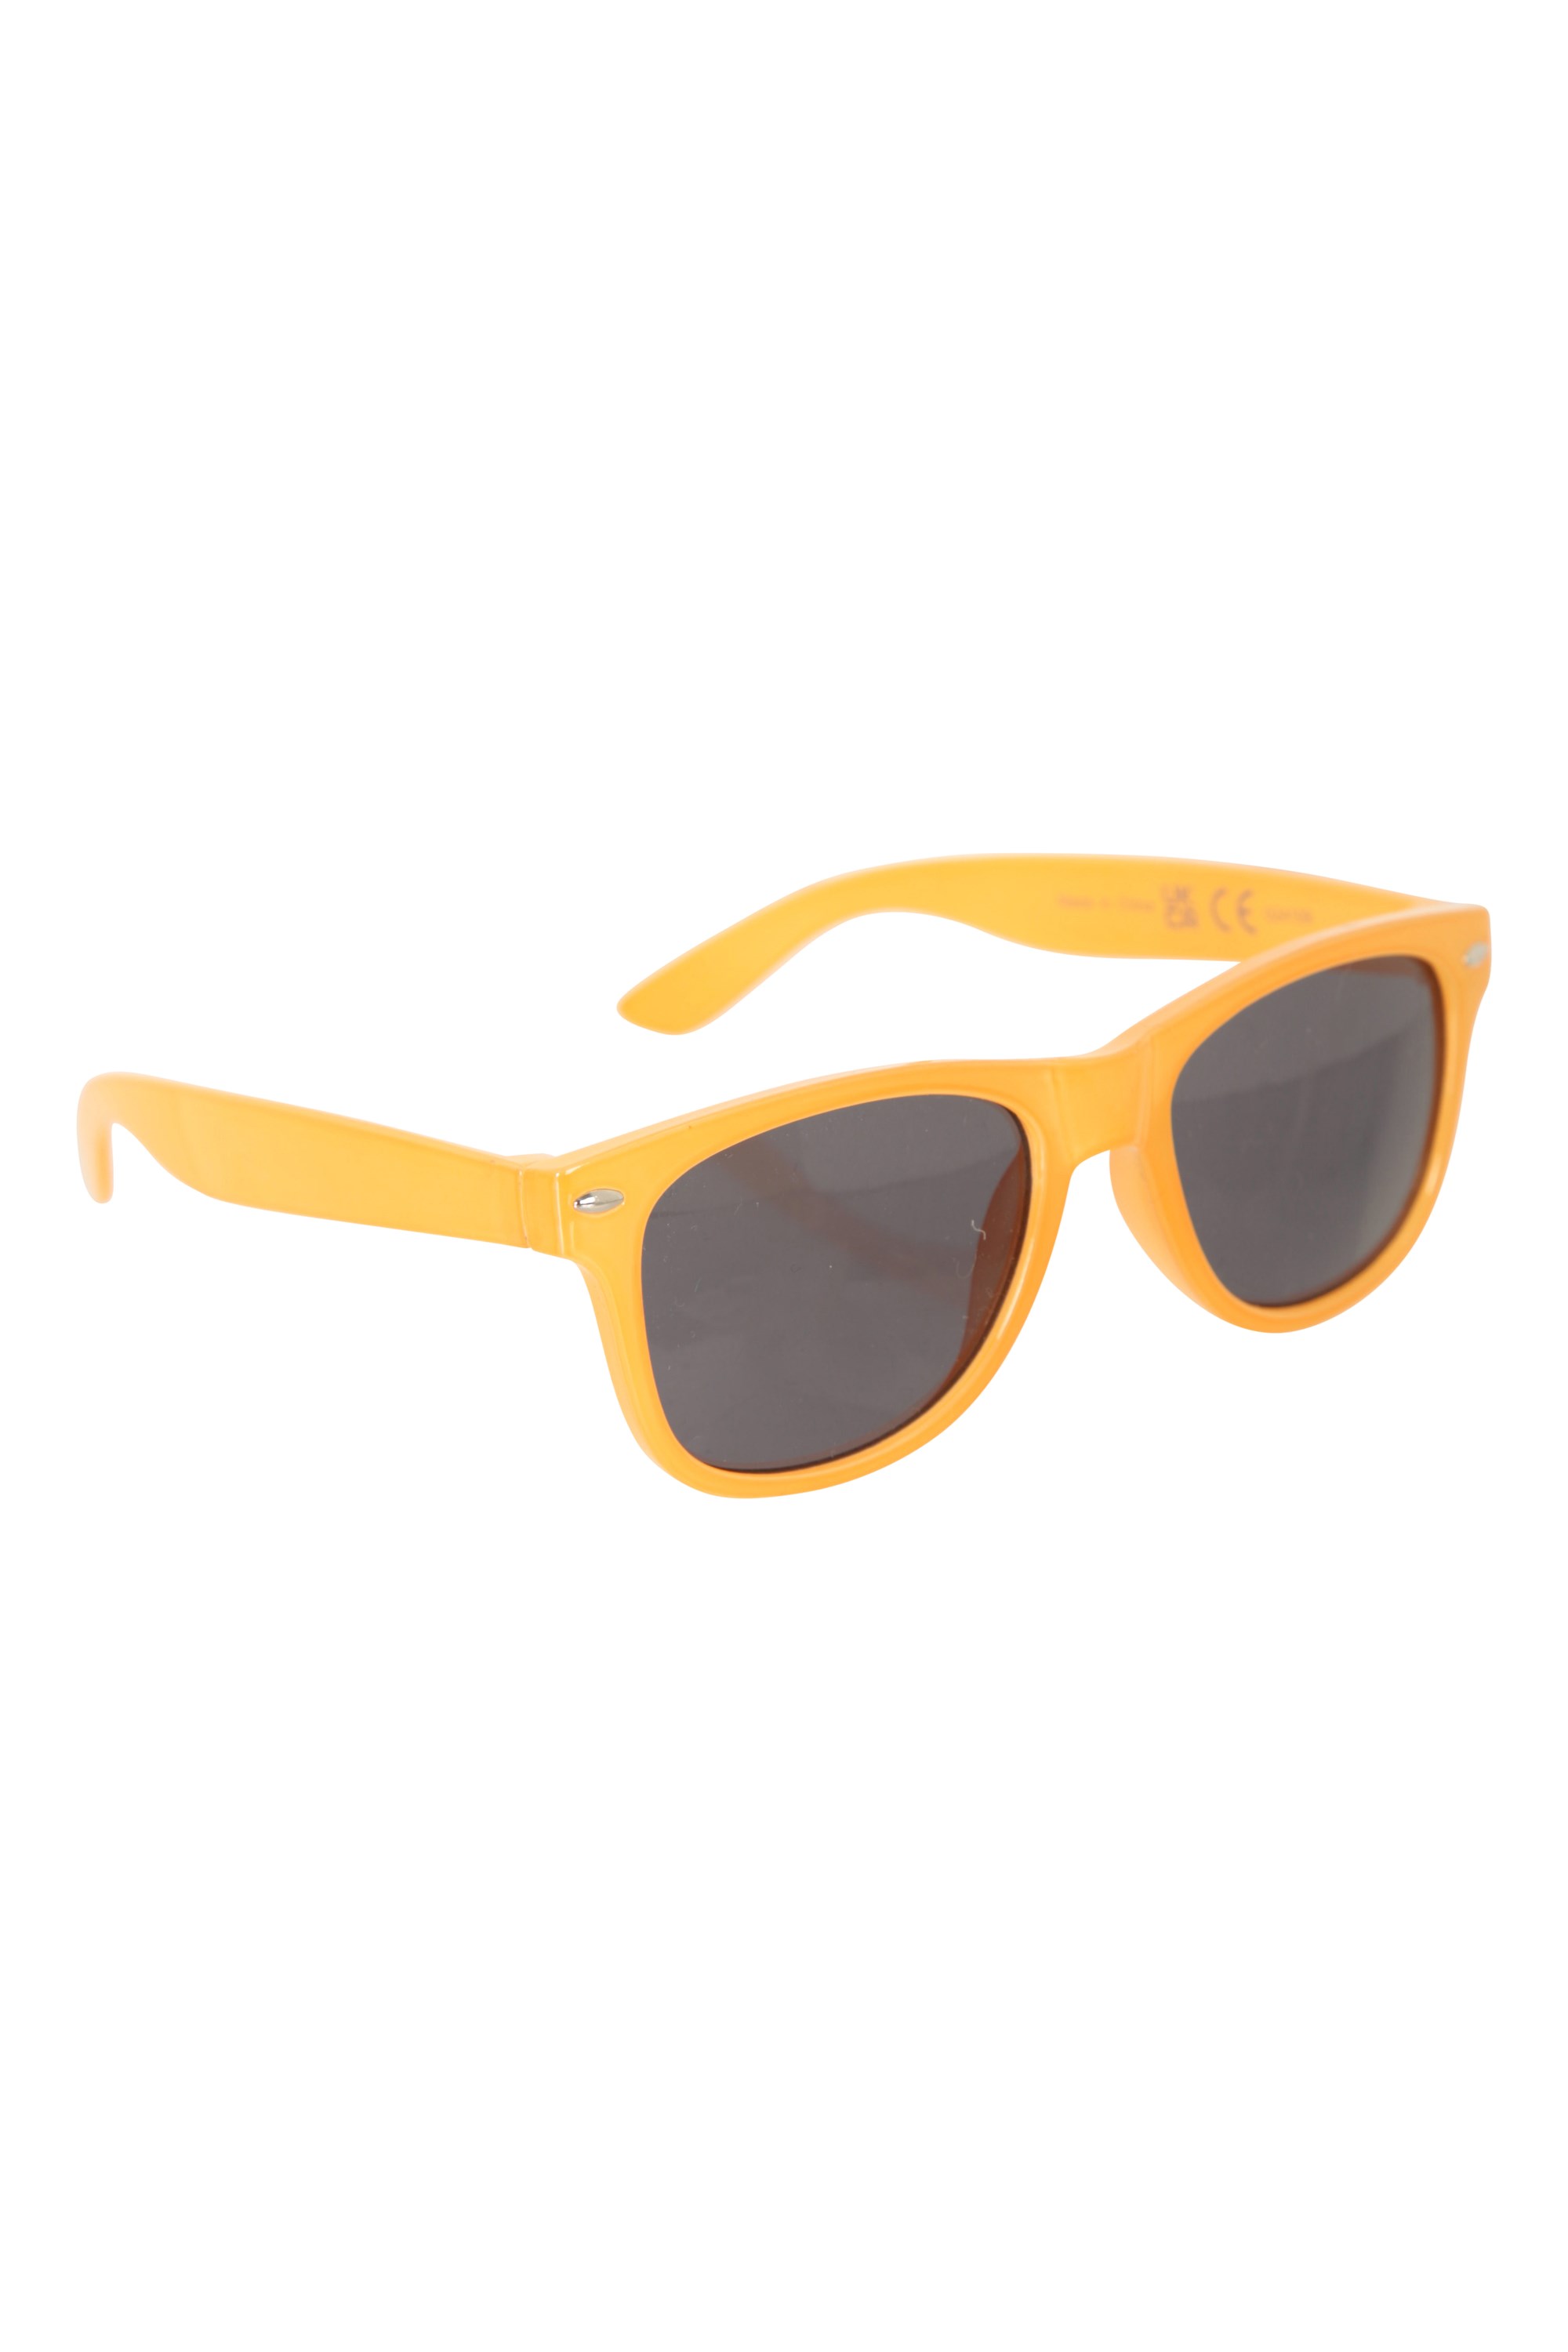 Jaques Kids Sunglasses - Orange